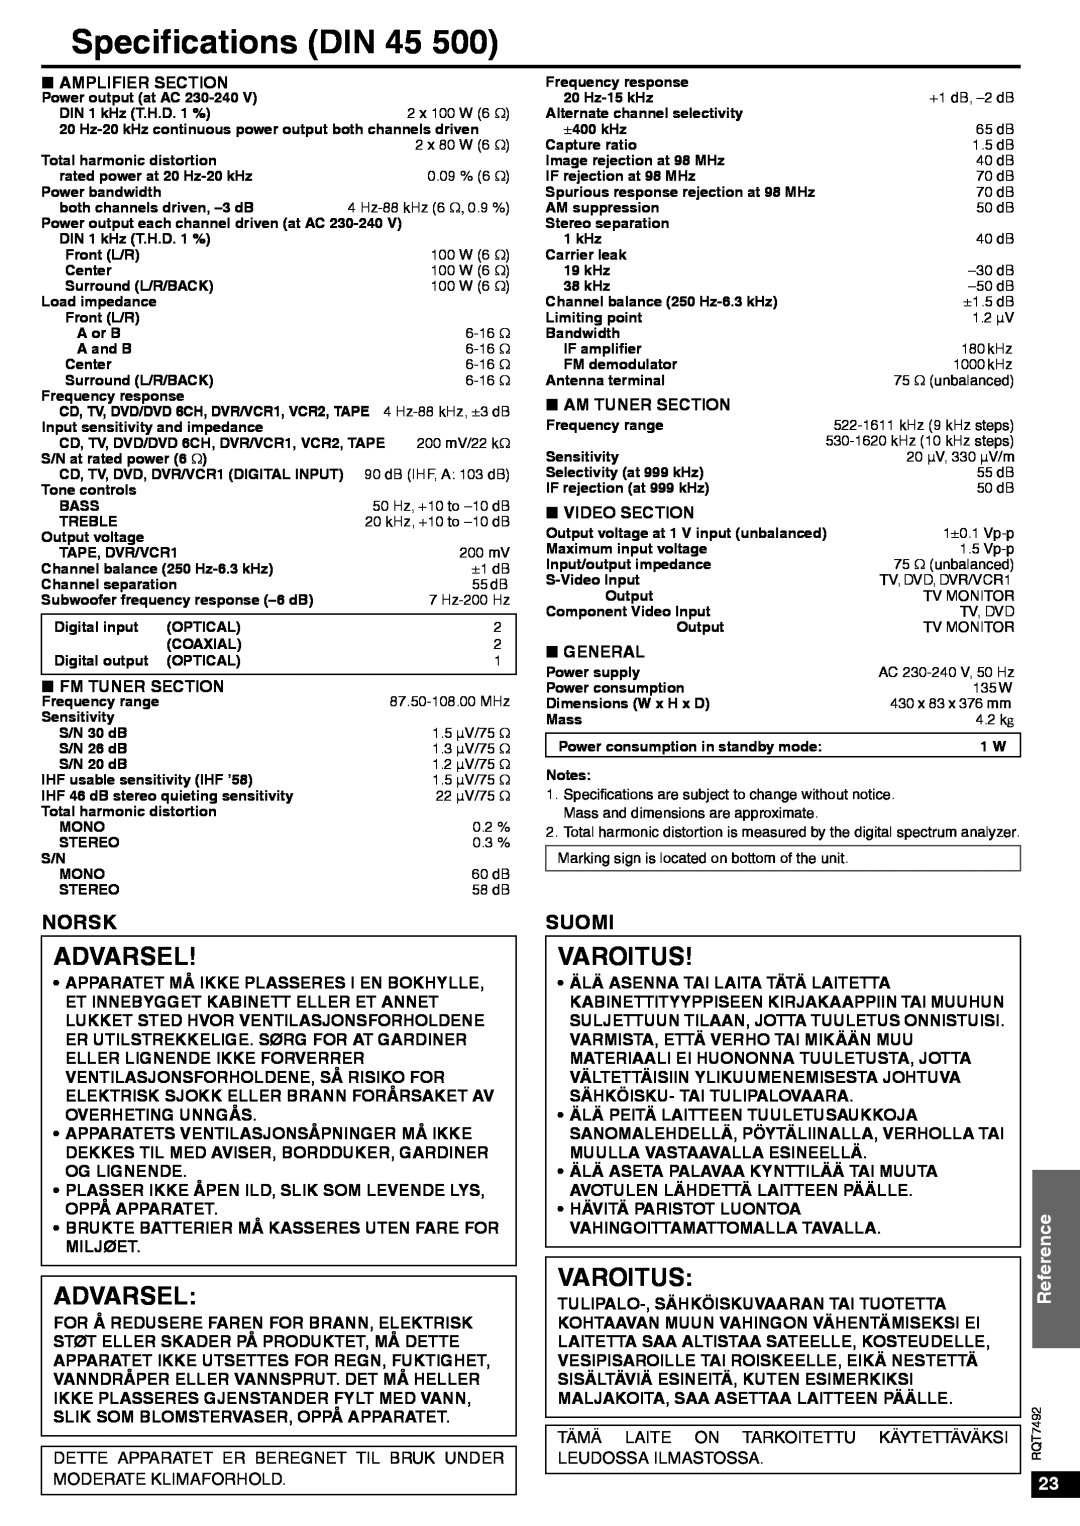 Panasonic SA-XR50 specifications Specifications DIN, Advarsel, Varoitus 